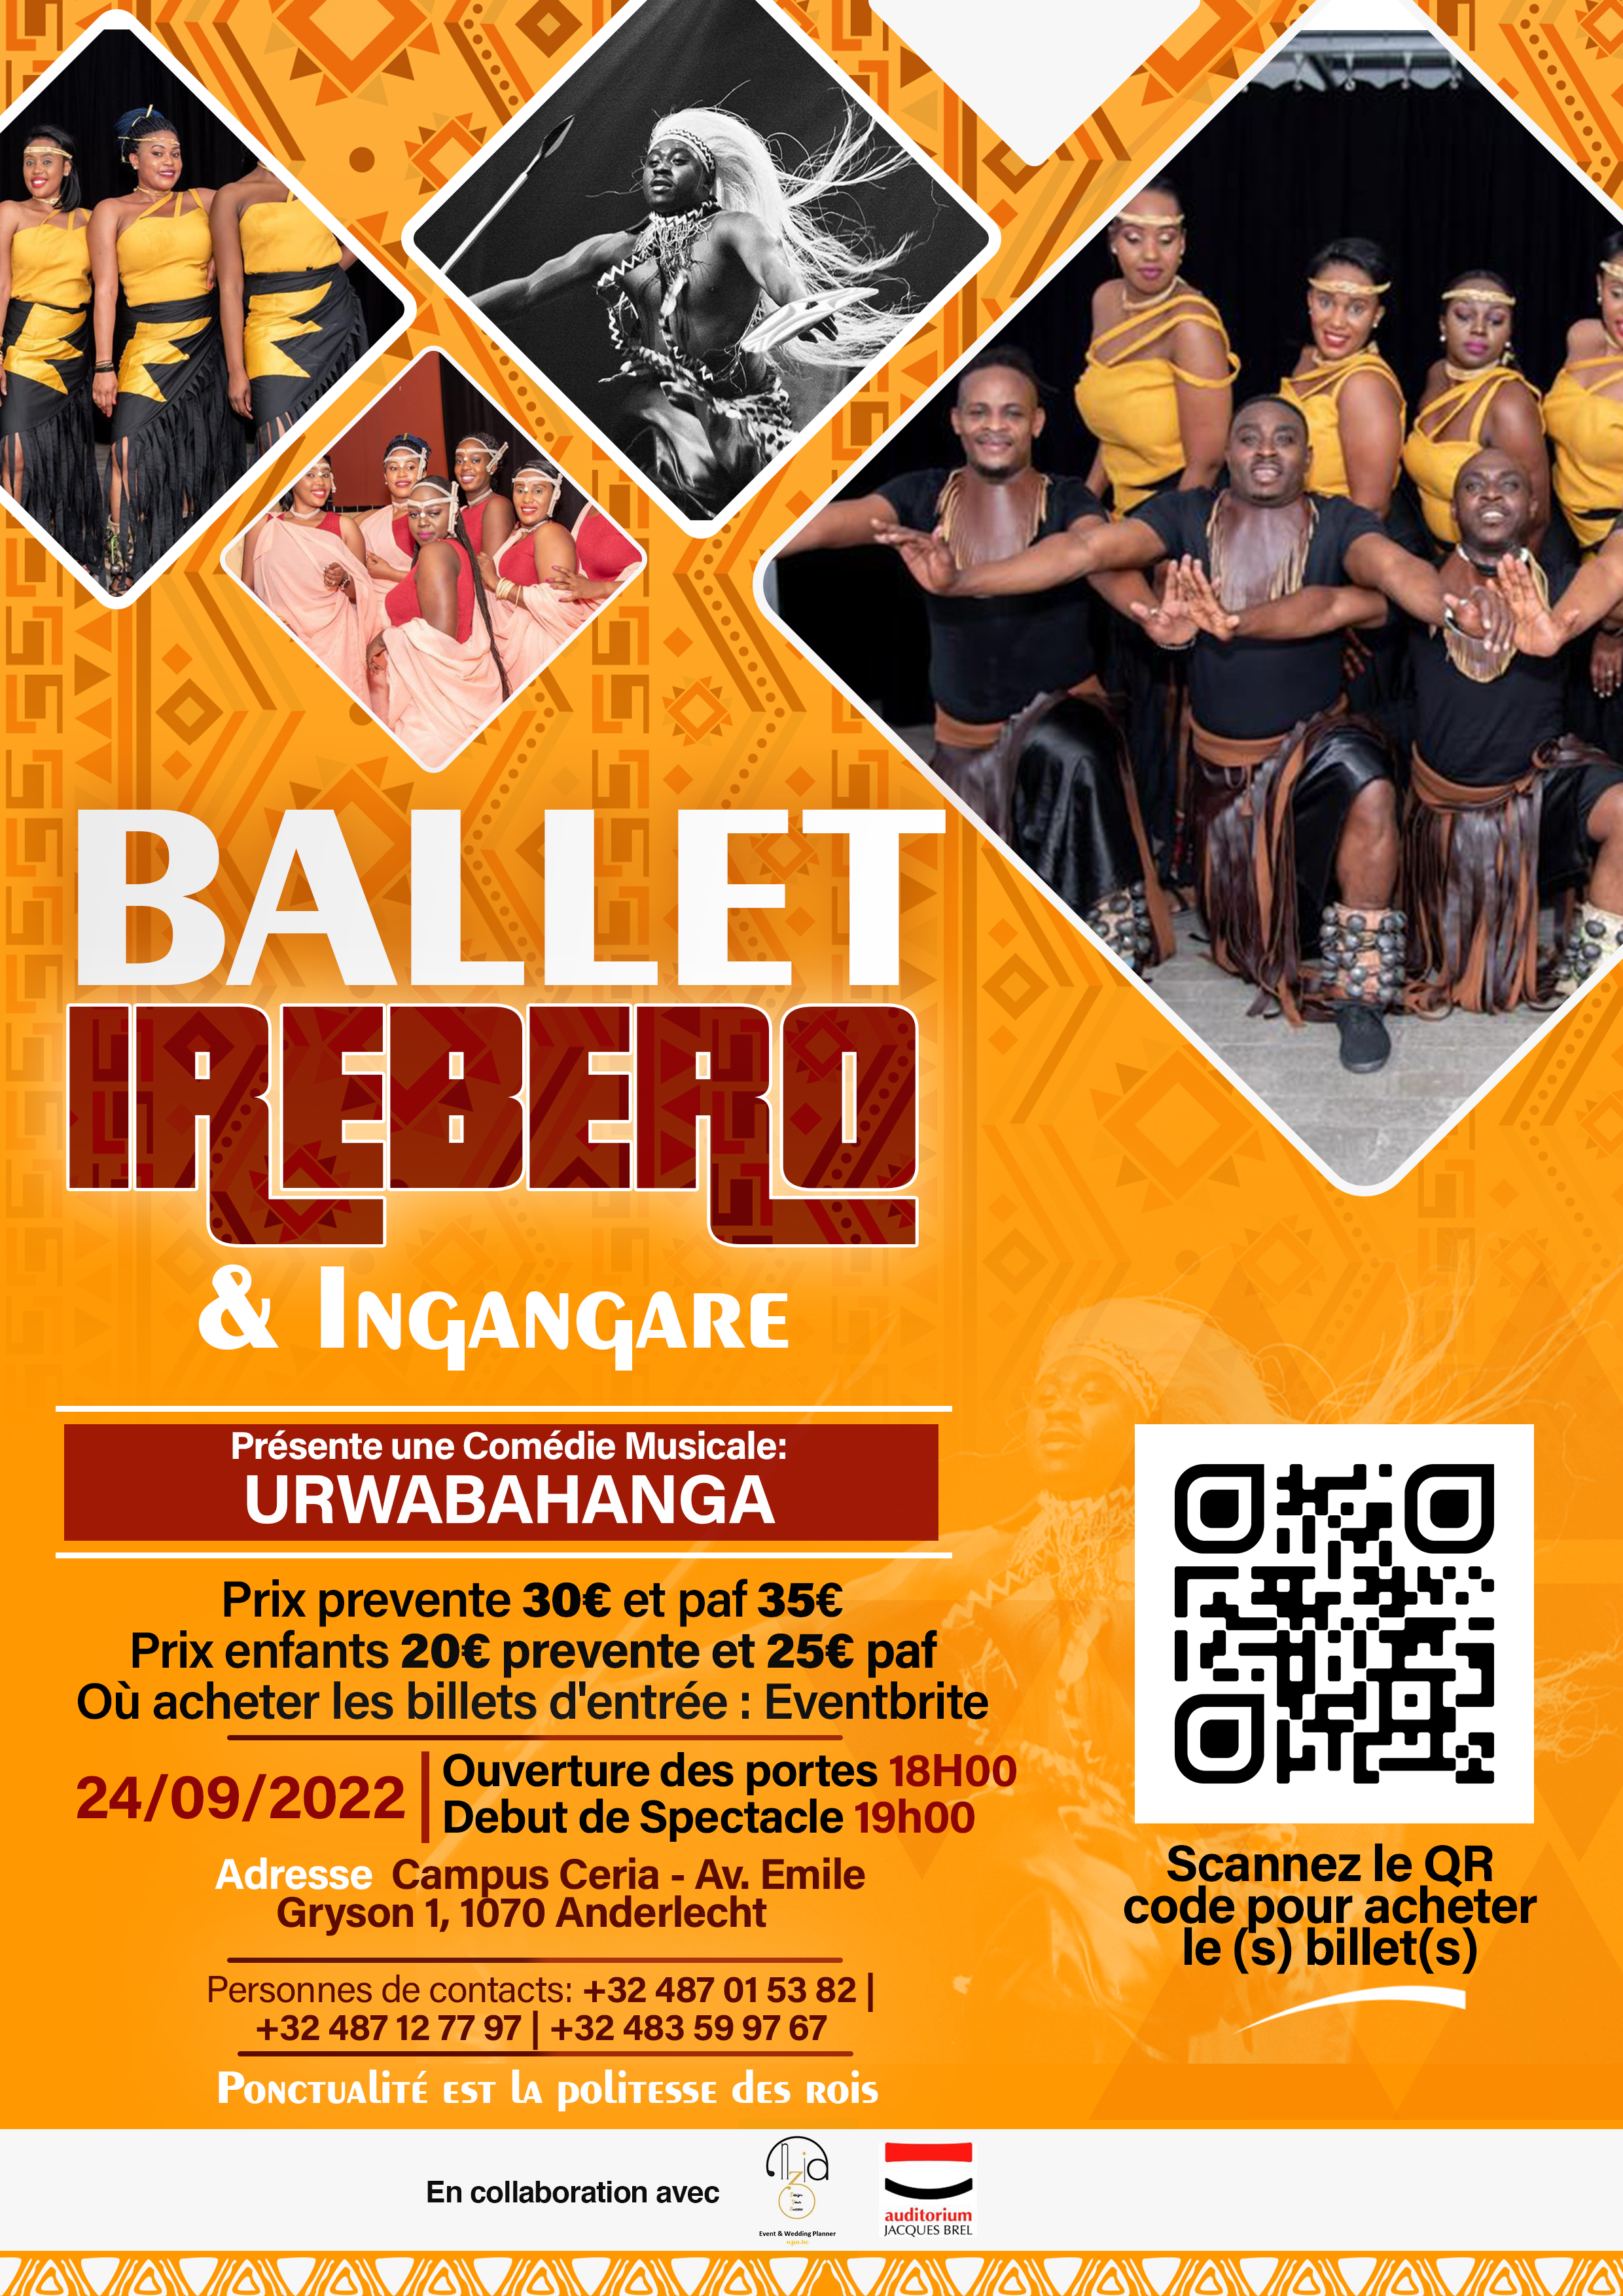 Irebero Ballet